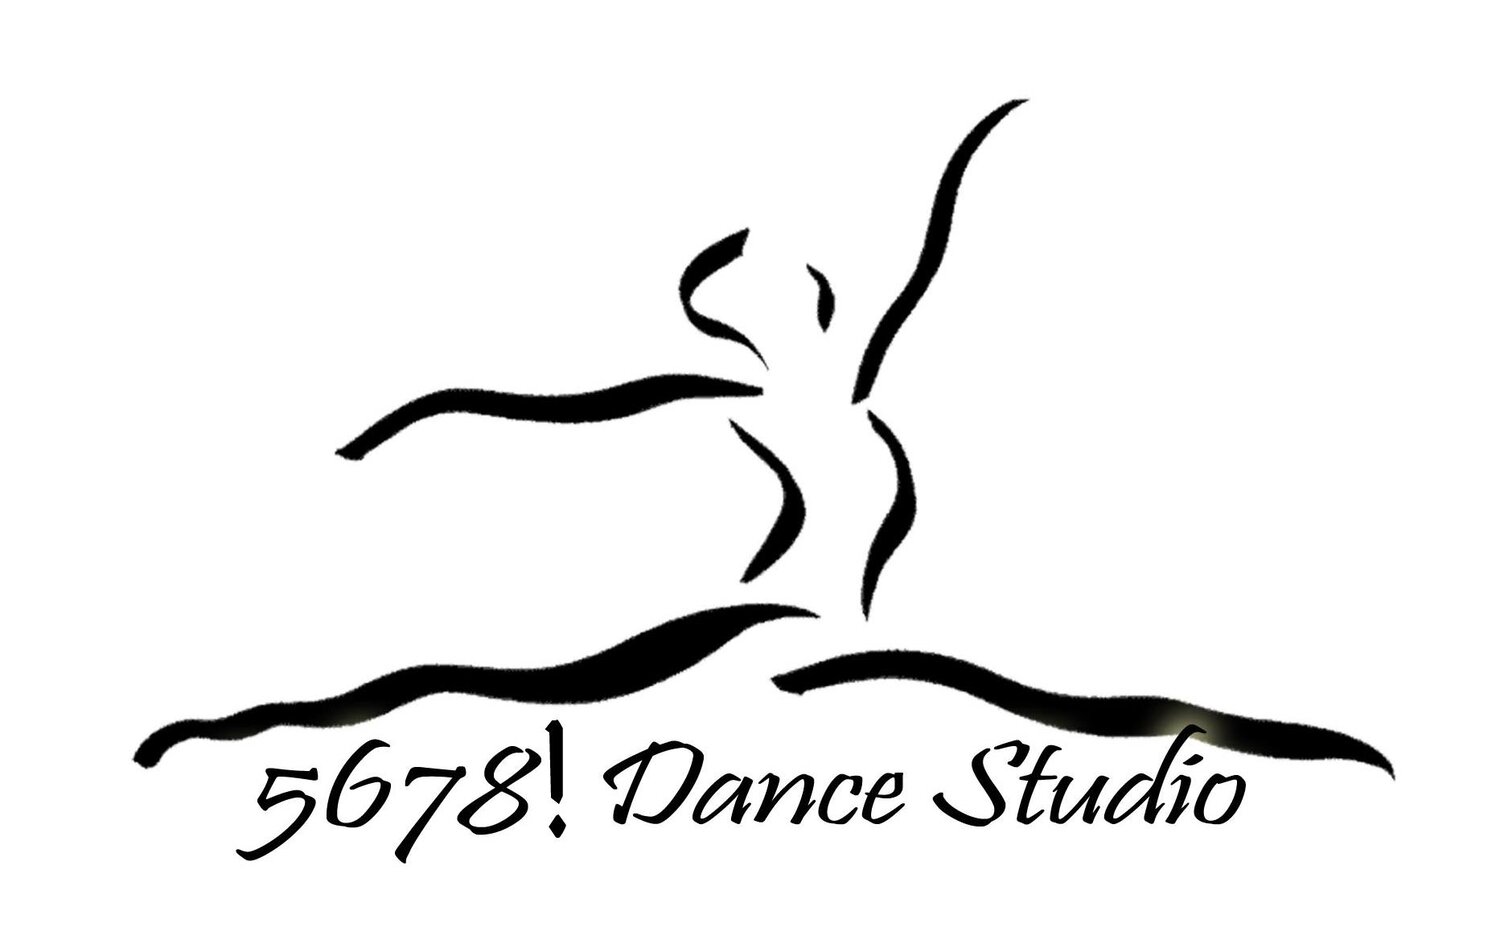 5678! Dance Studio